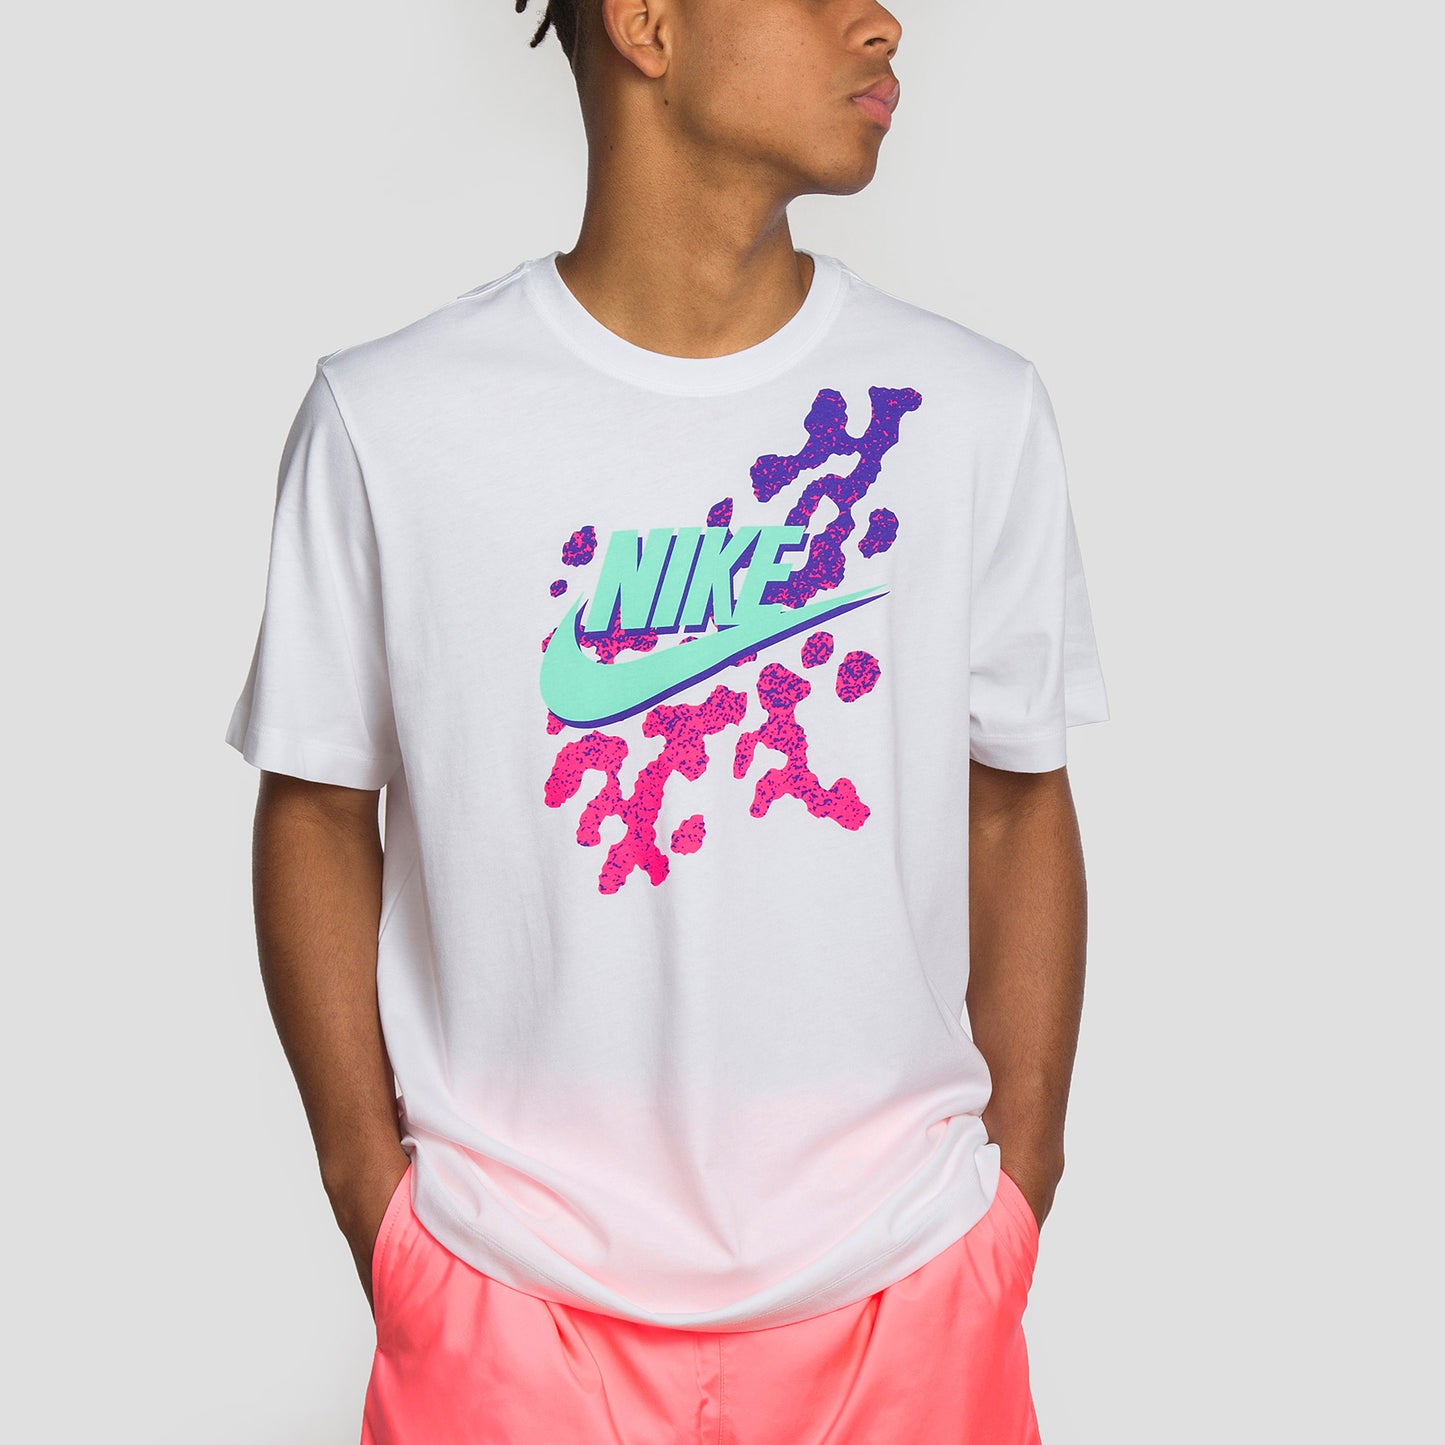 Nike Camiseta Sportswear Beach Party - DD1278-100 - Colección Chico